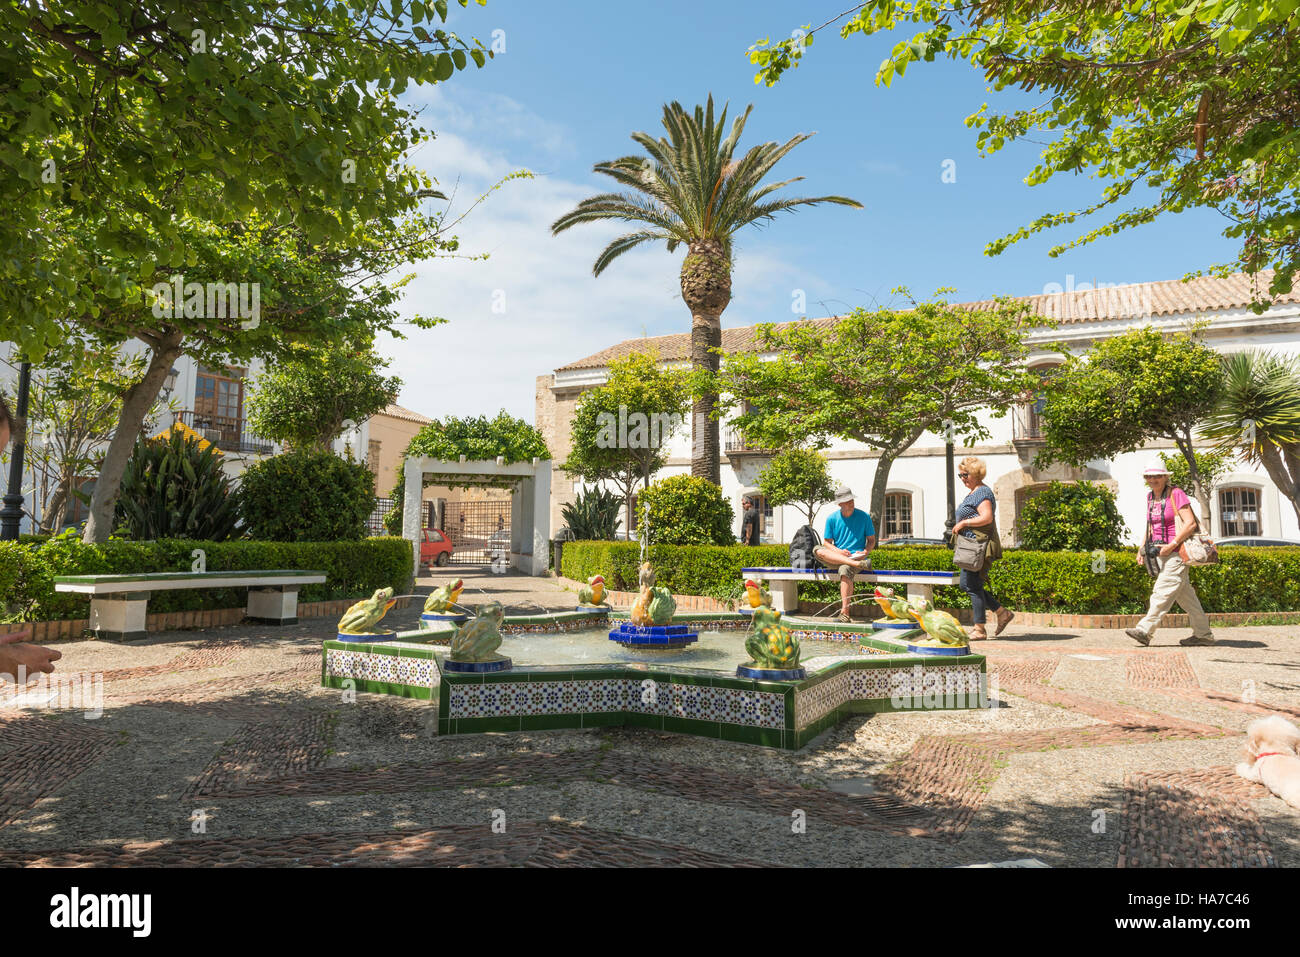 Plaza de la Ranita, Tarifa, Cadiz, Costa de la Luz, Andalusia, Southern Spain. Stock Photo